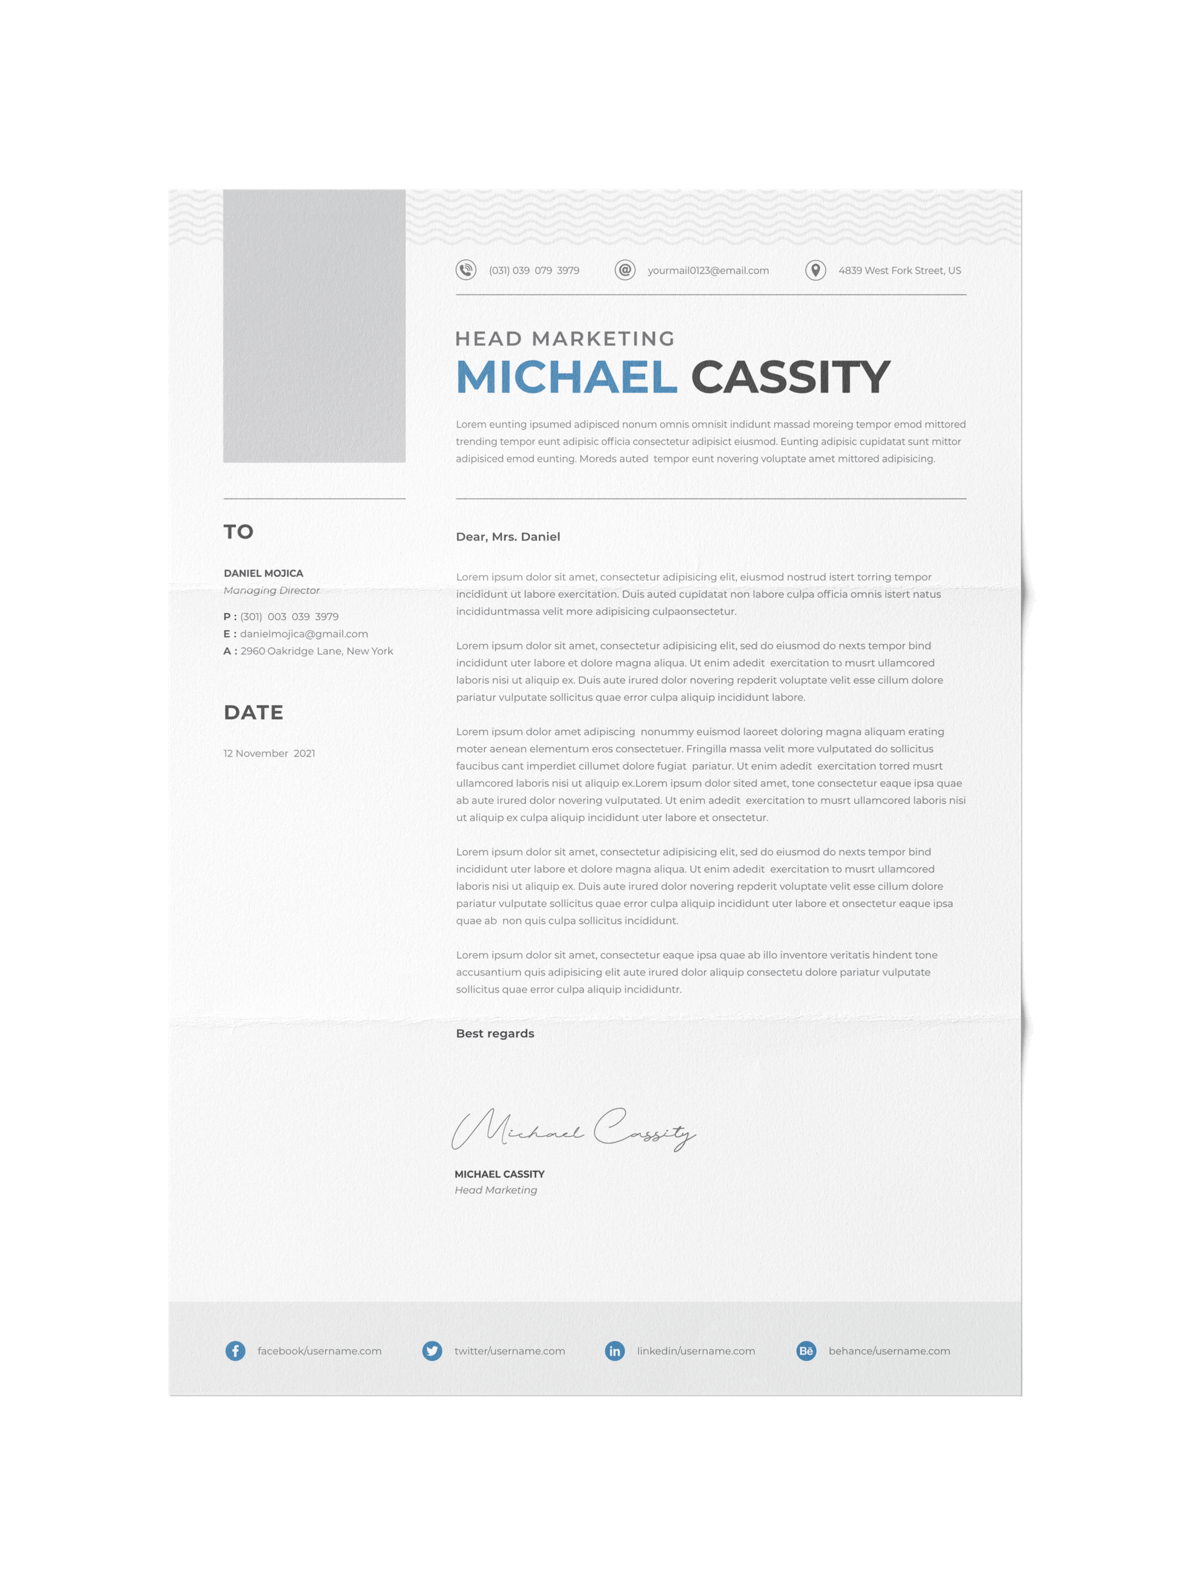 CV #149 Michael Cassity